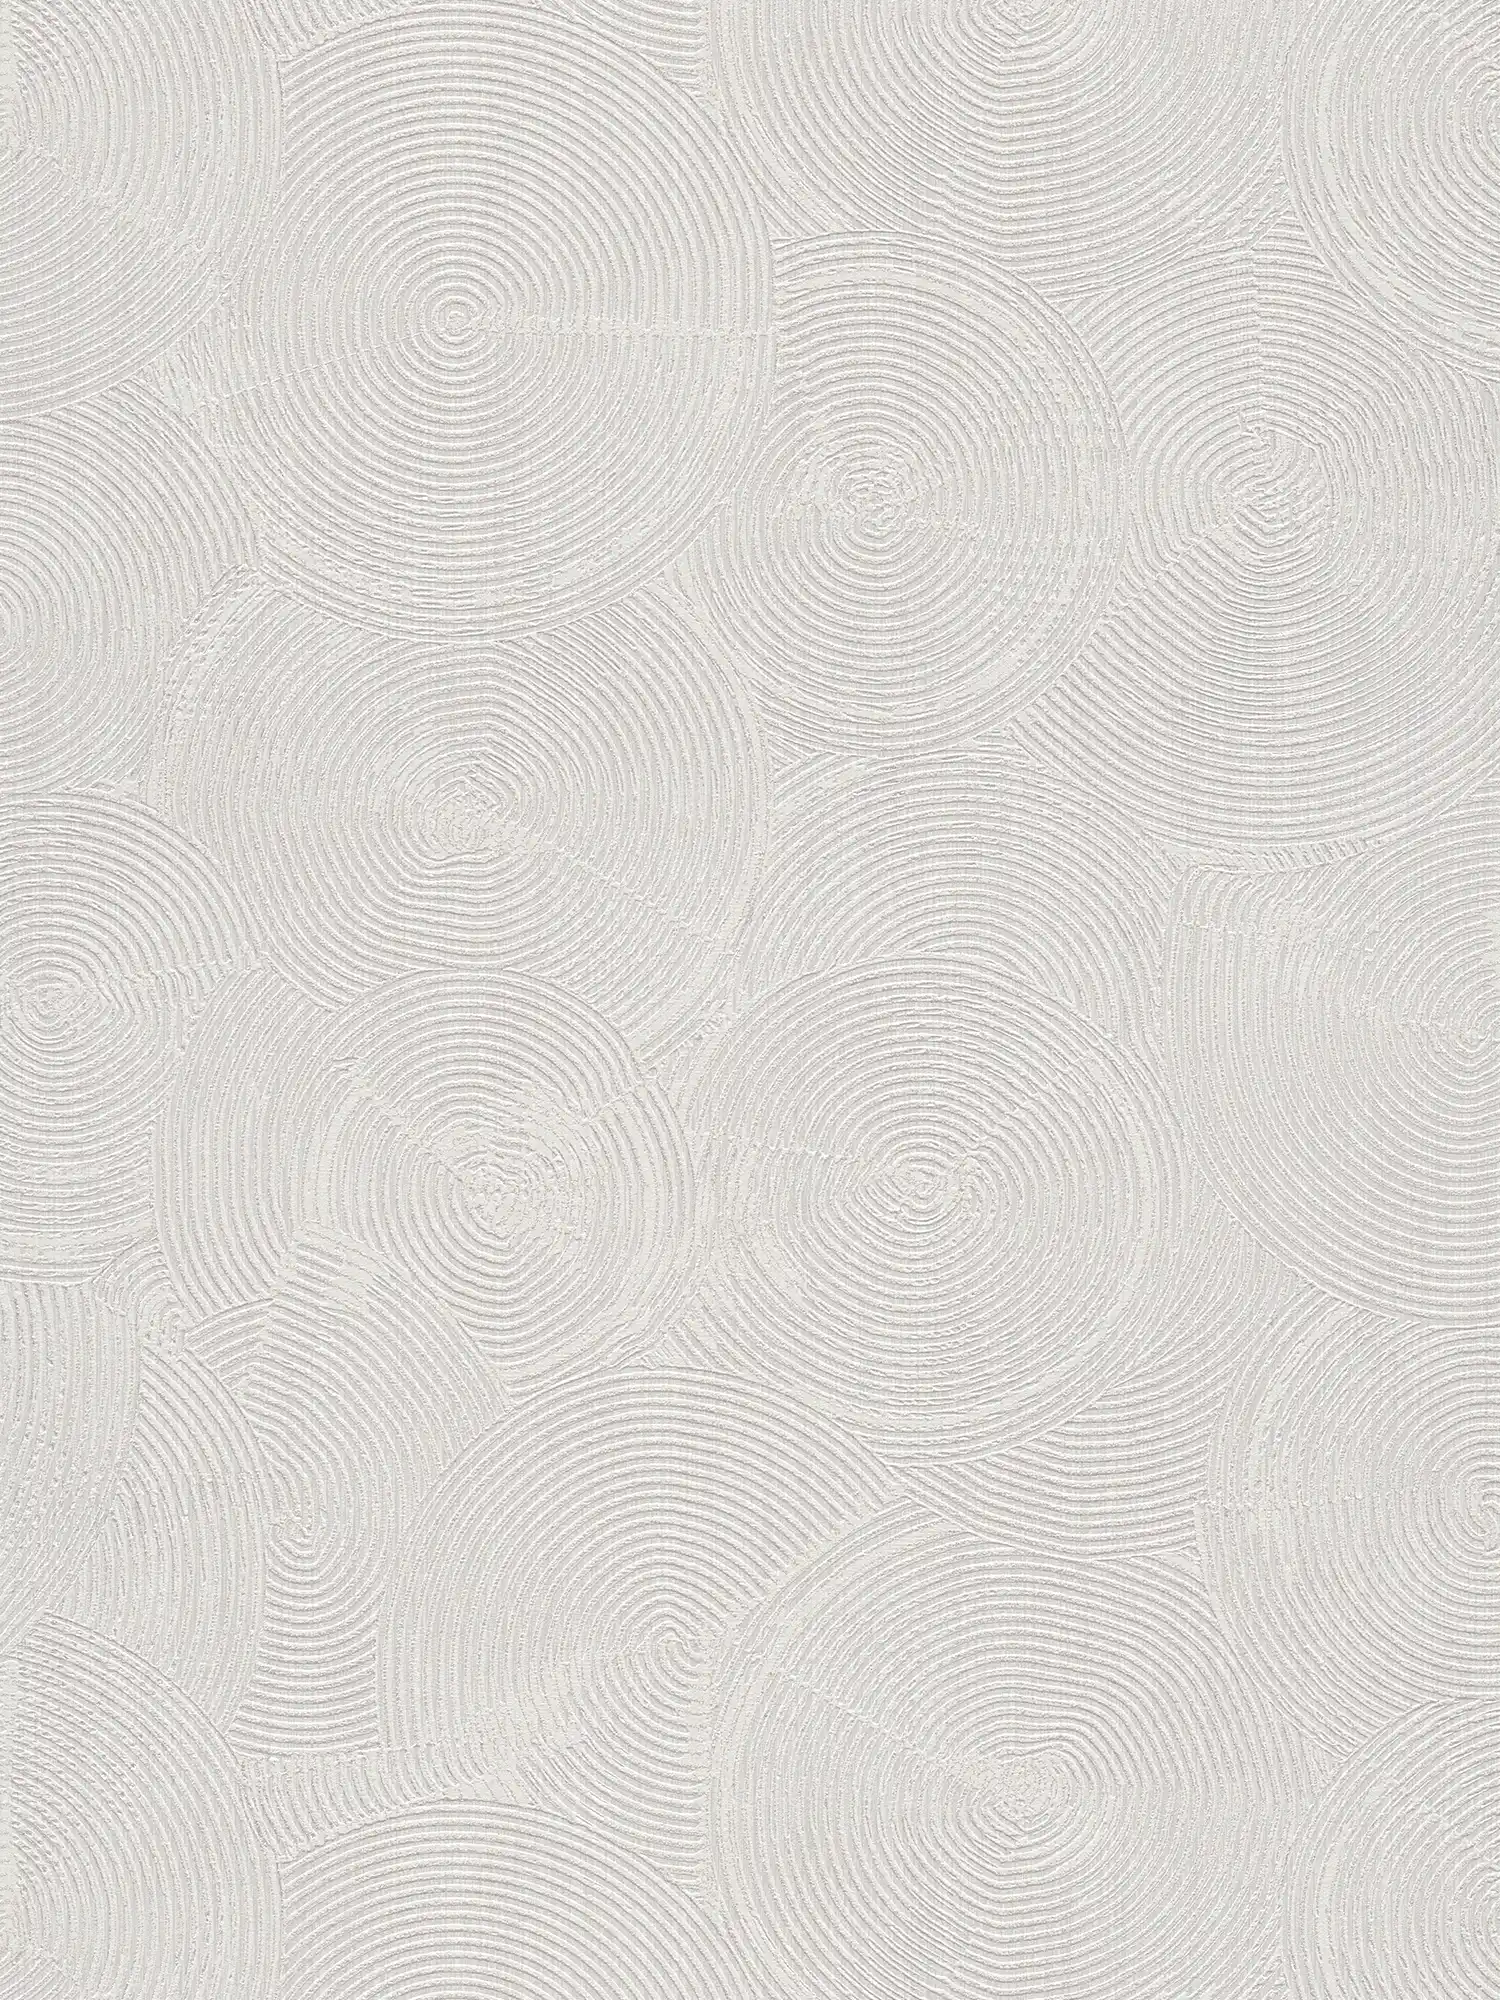 Papel pintado con aspecto de yeso moderno y acentos metálicos - gris, metálico, blanco
